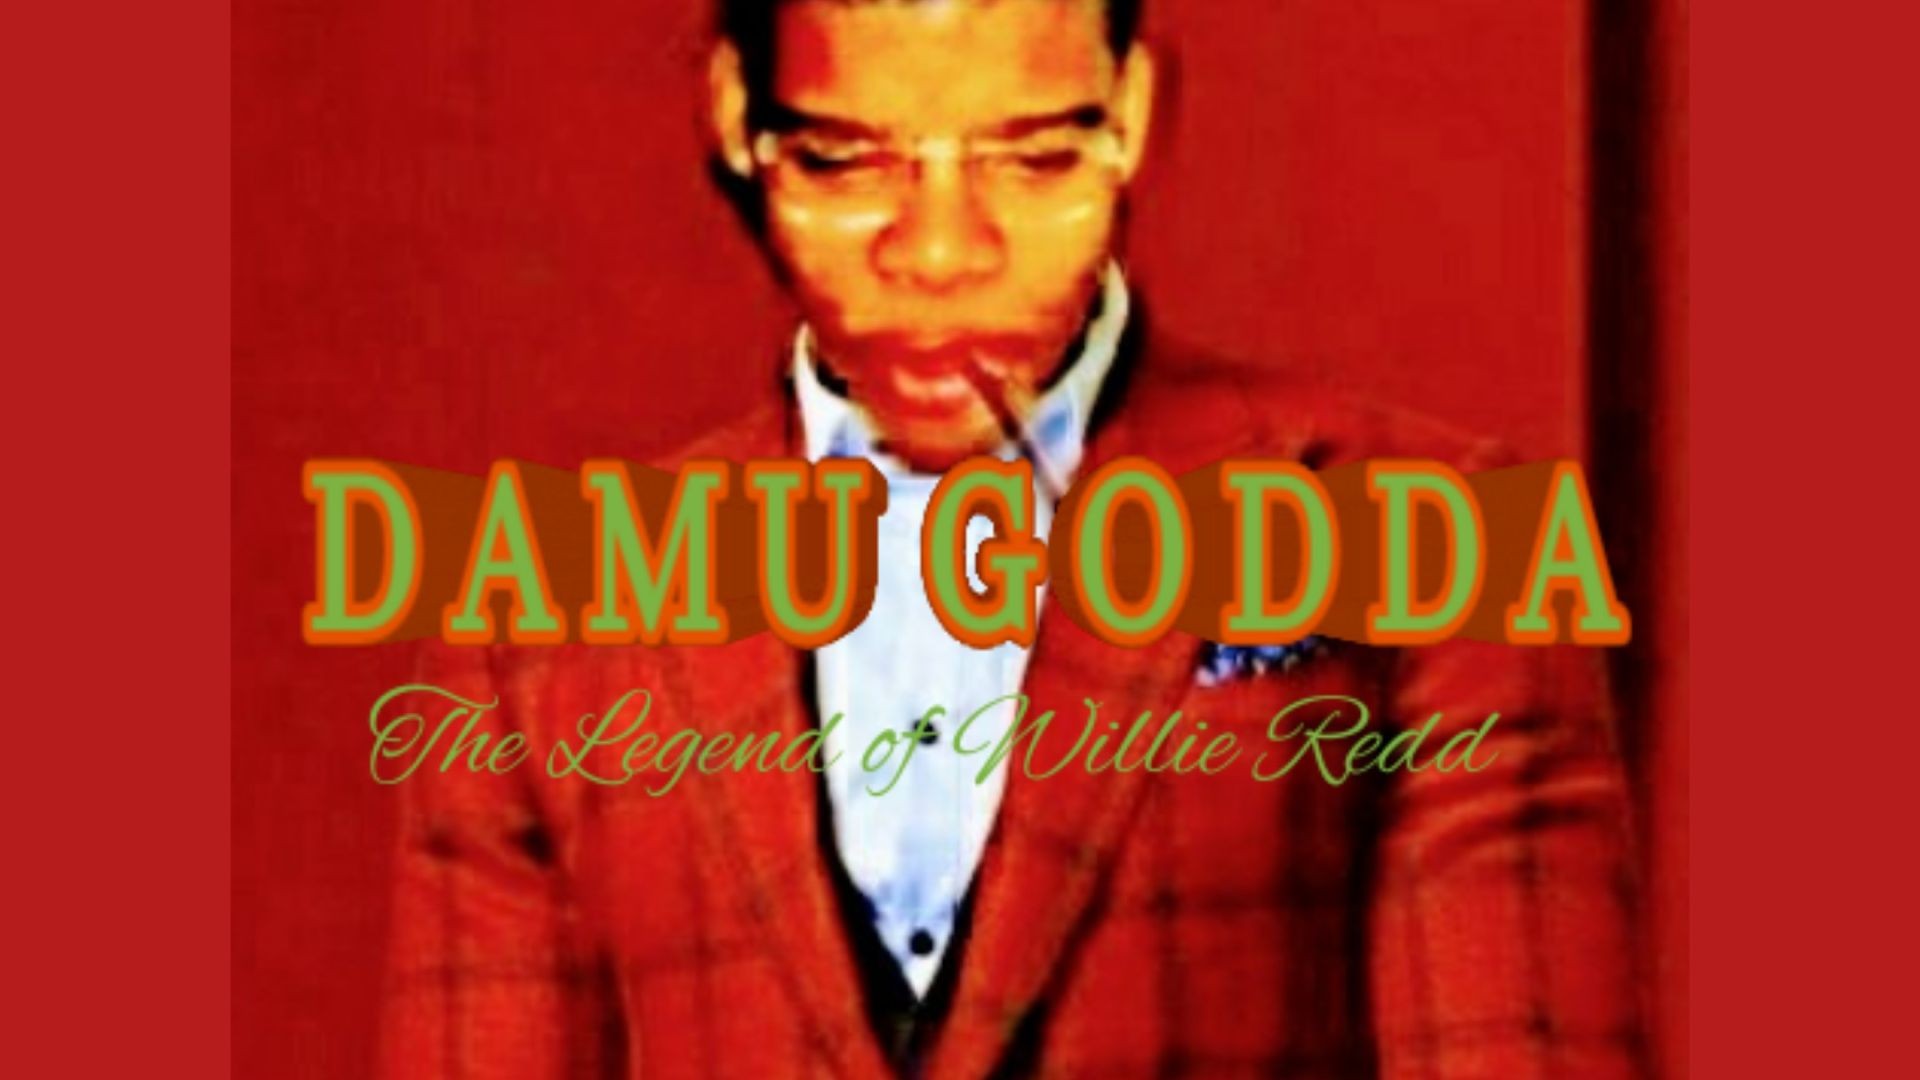 DamuGodda: The Legend of Willie Redd